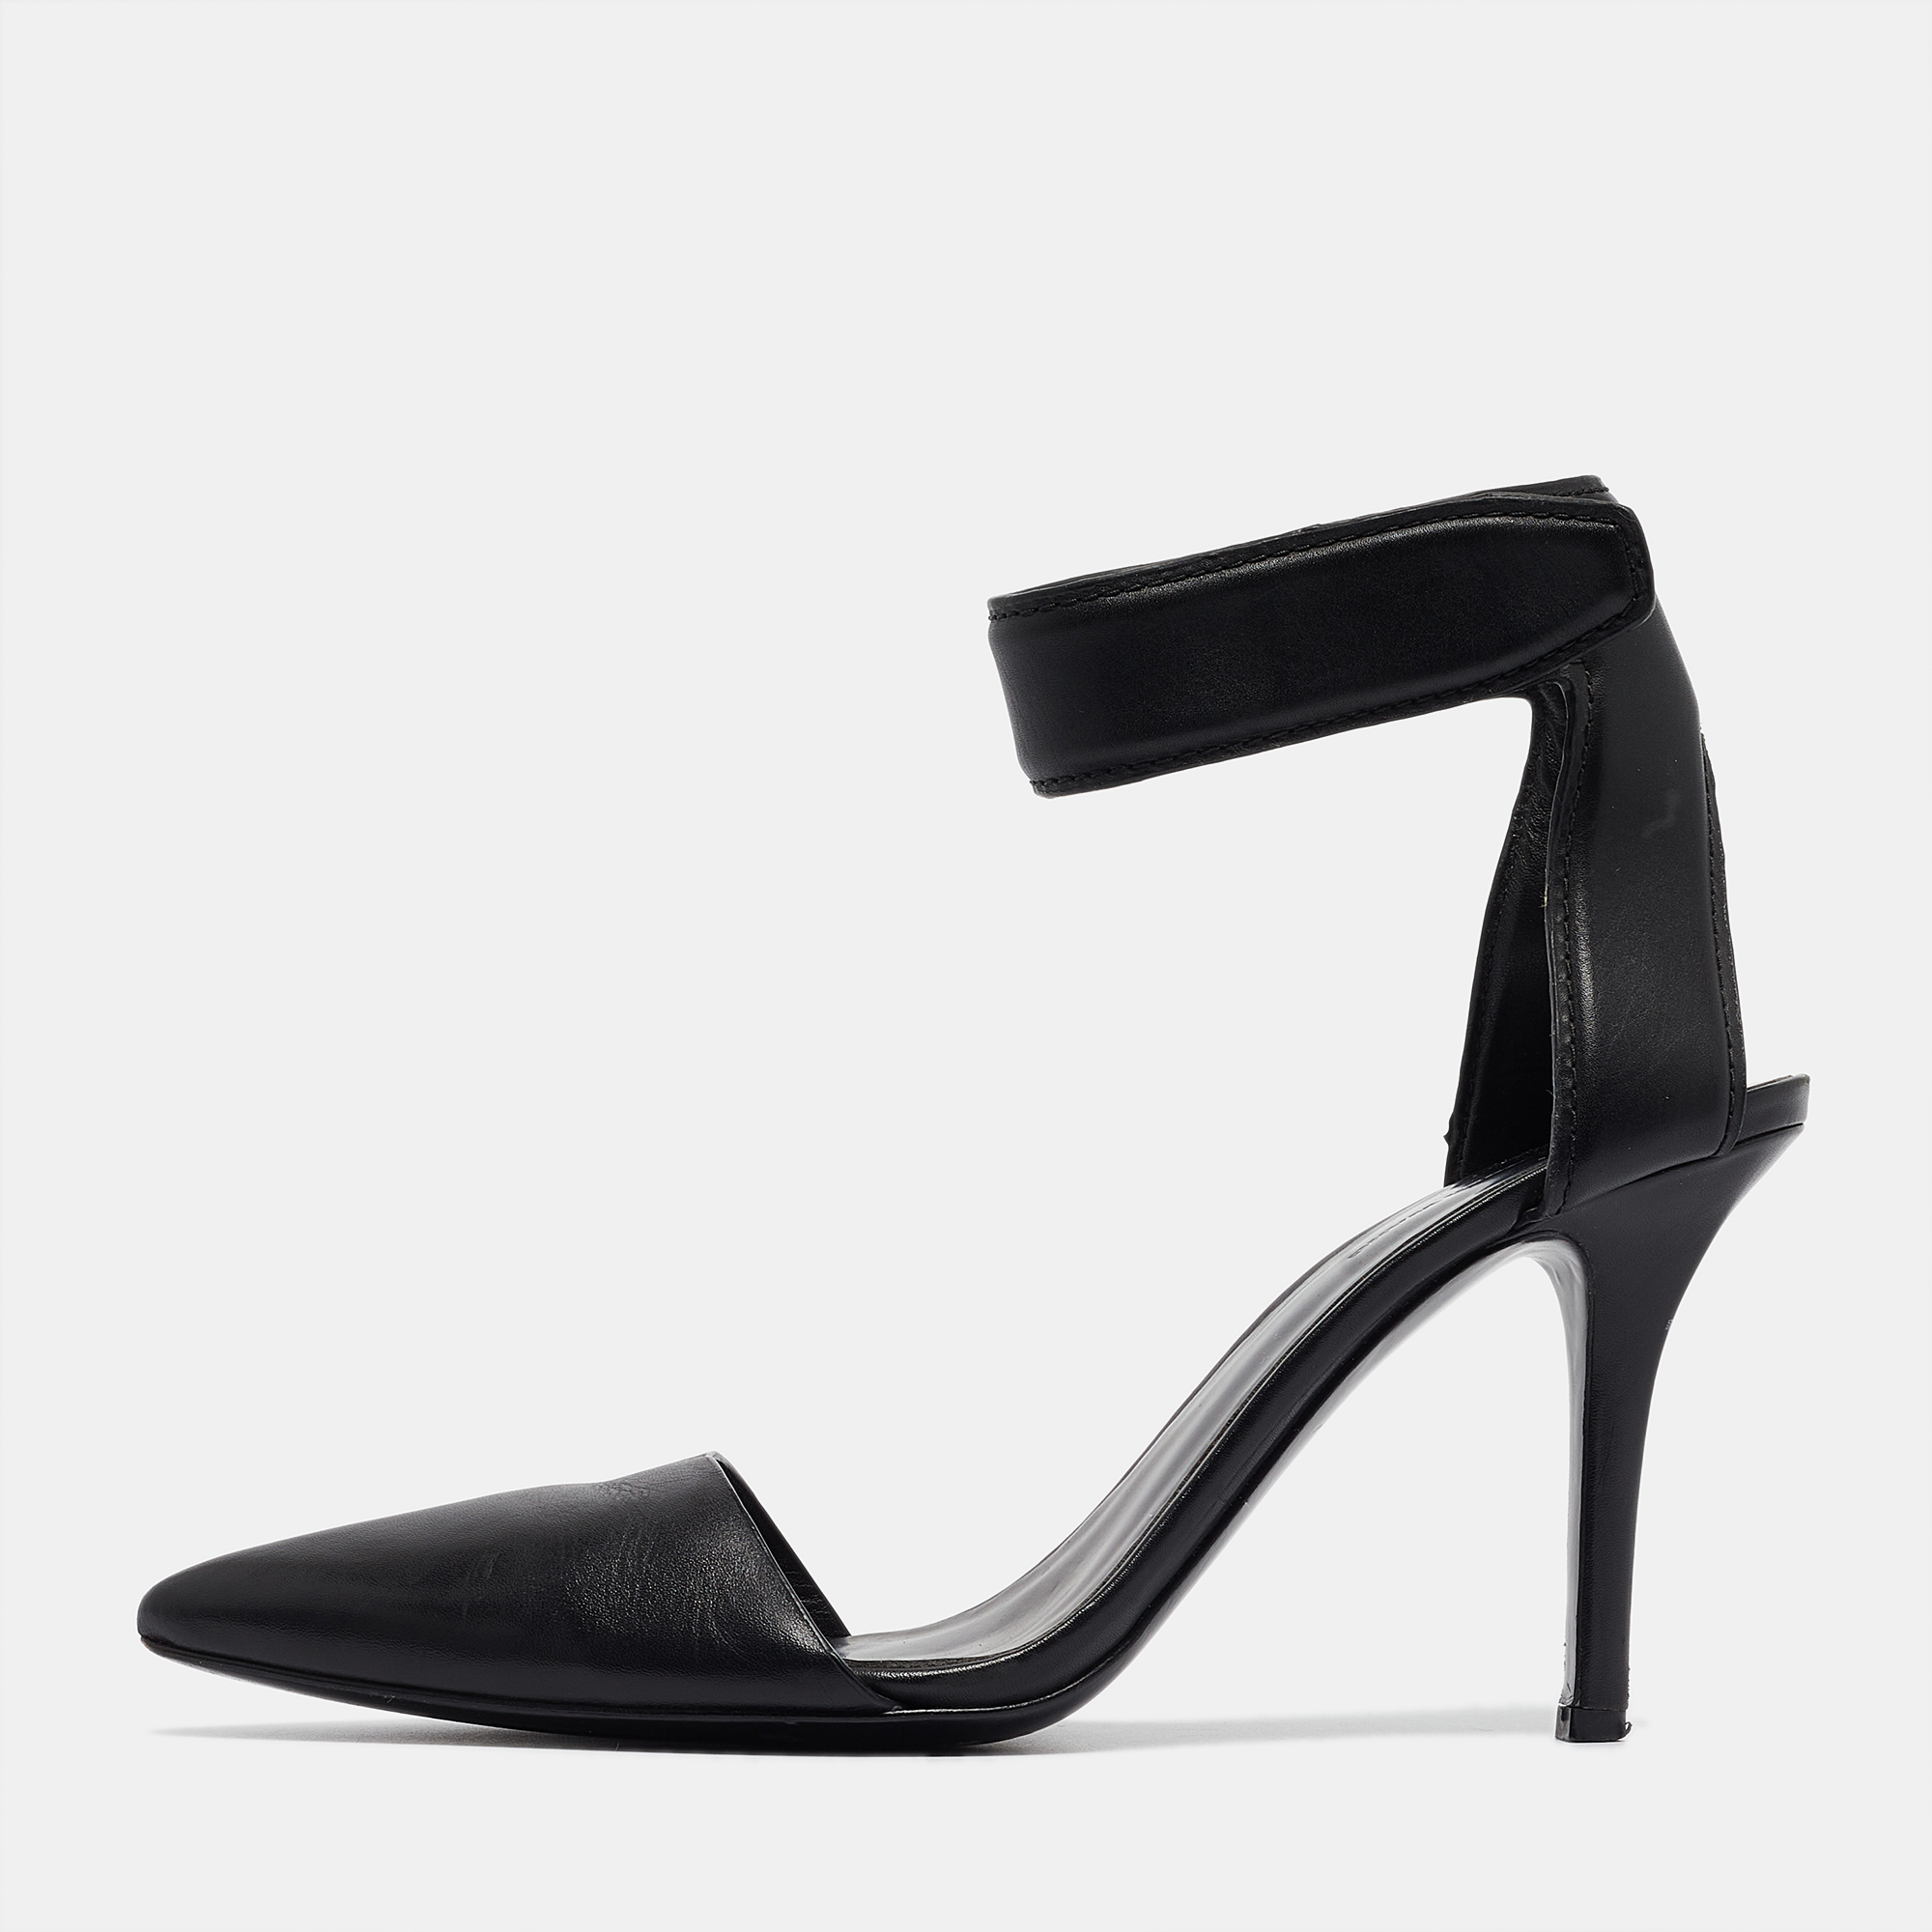 Alexander wang black leather ankle strap pumps size 38.5